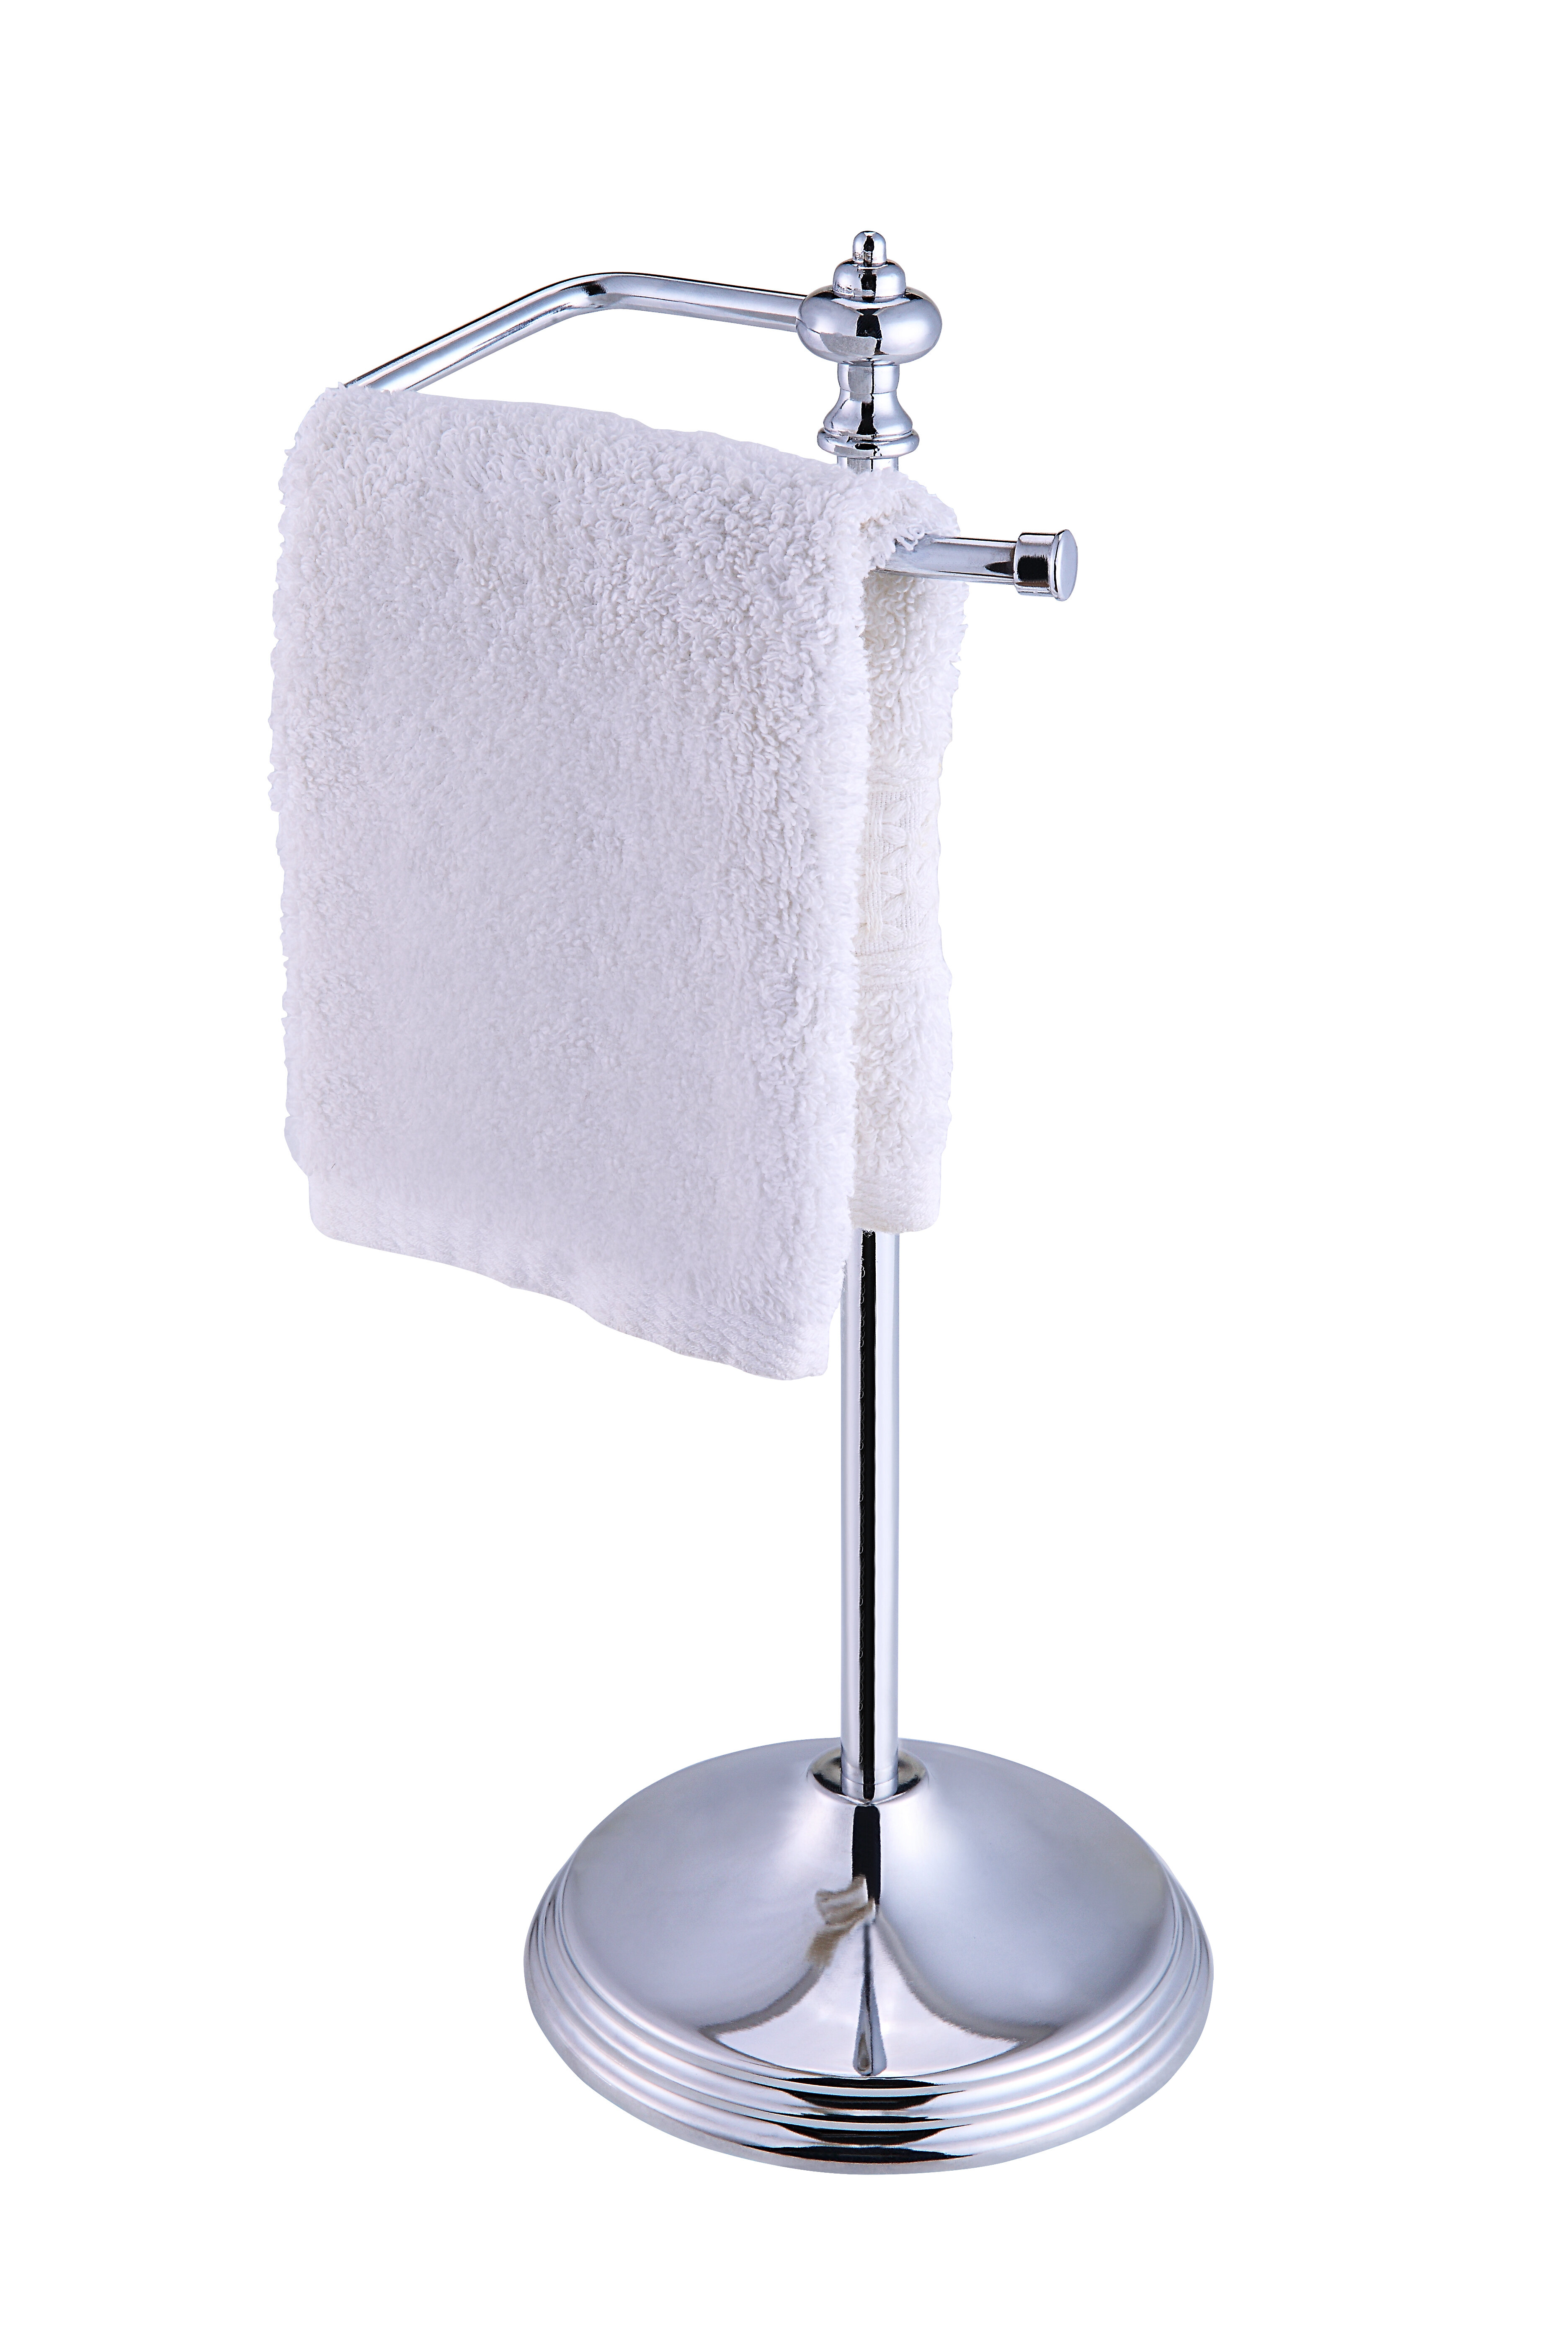 Freestanding Fingertip Towel Holder Stand for Bathroom or Kitchen Countertops 